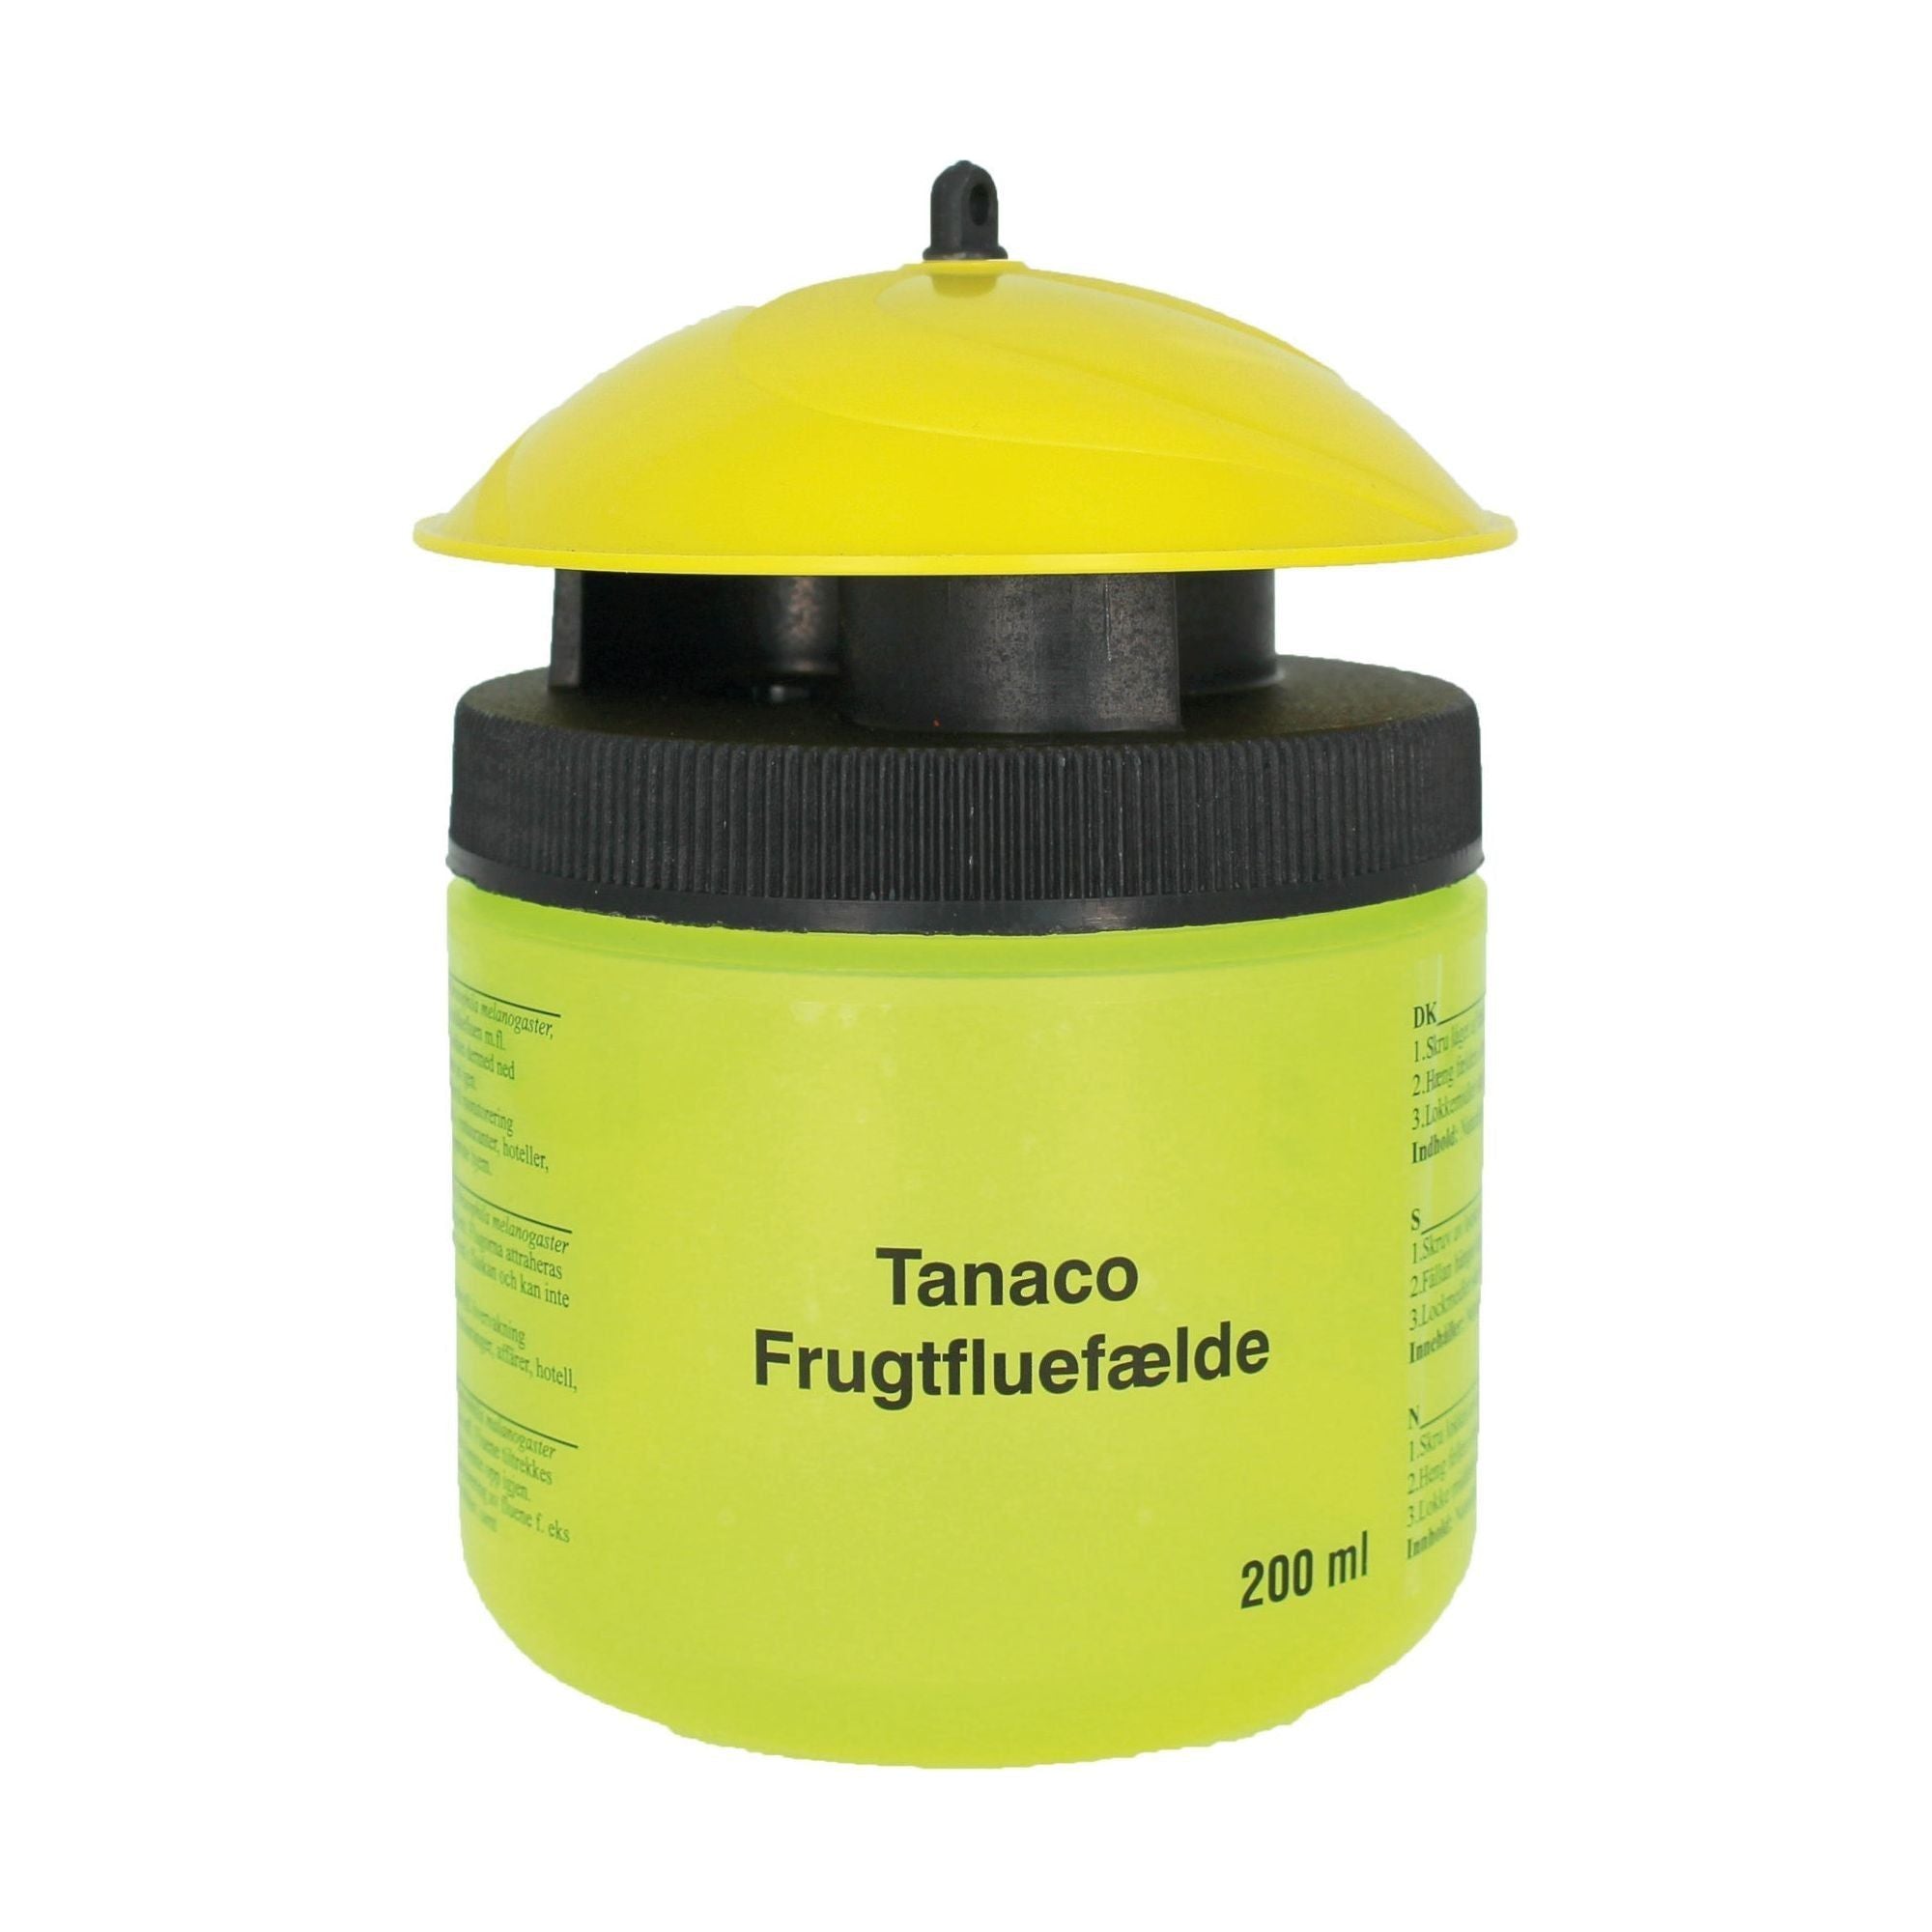 Tanaco Fruit fly trap Prof. incl. 200 ml. lure – Sikkerhedsgiganten